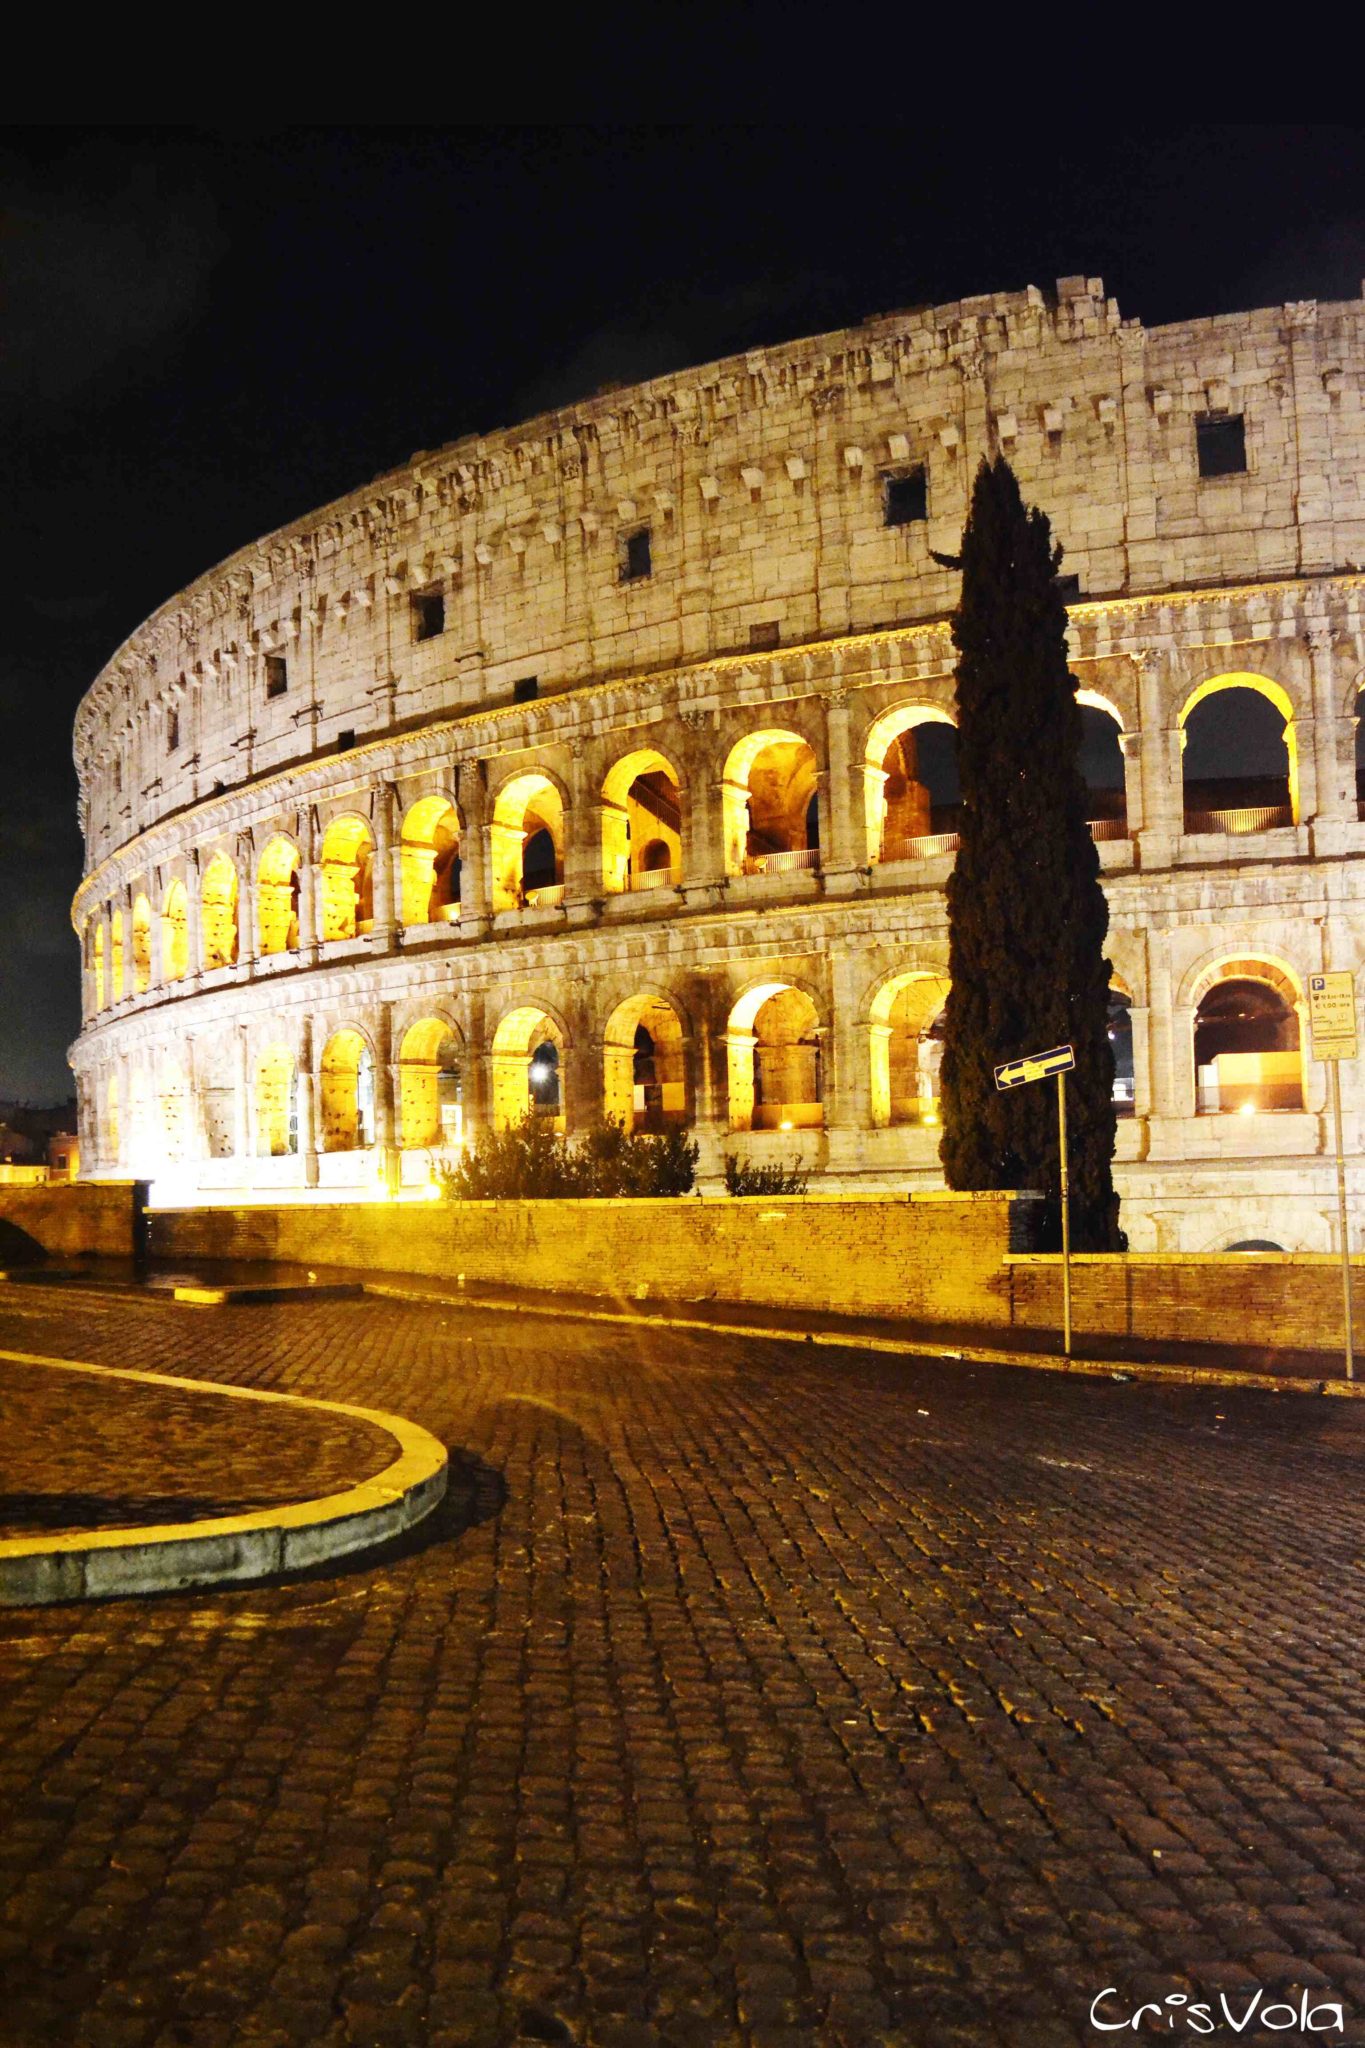 Colosseum Animated Gif Roma Gif Images CrisVola.com musica italiana youtube